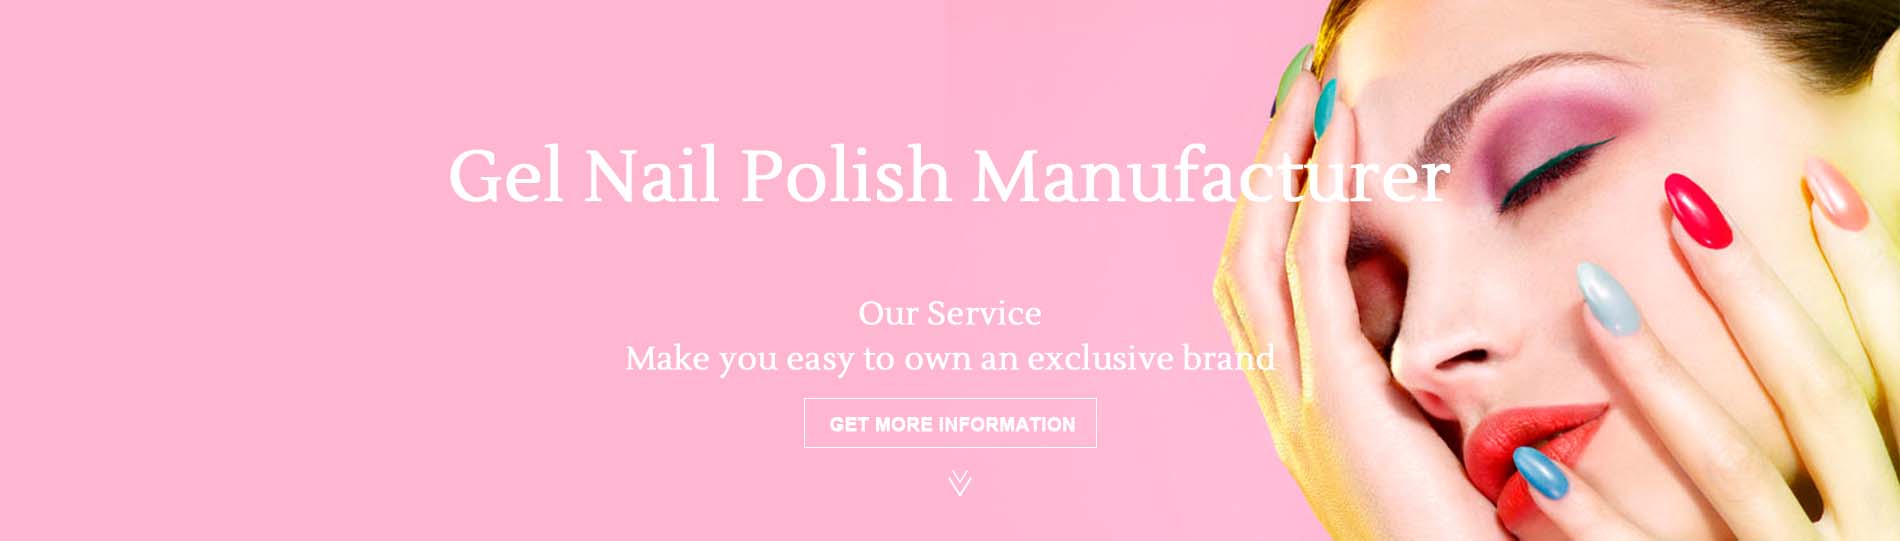 Professional UV Gel Nail Polish Manufacturer Manicure Nail Gel Kit Supplies  Vendor - MissGel